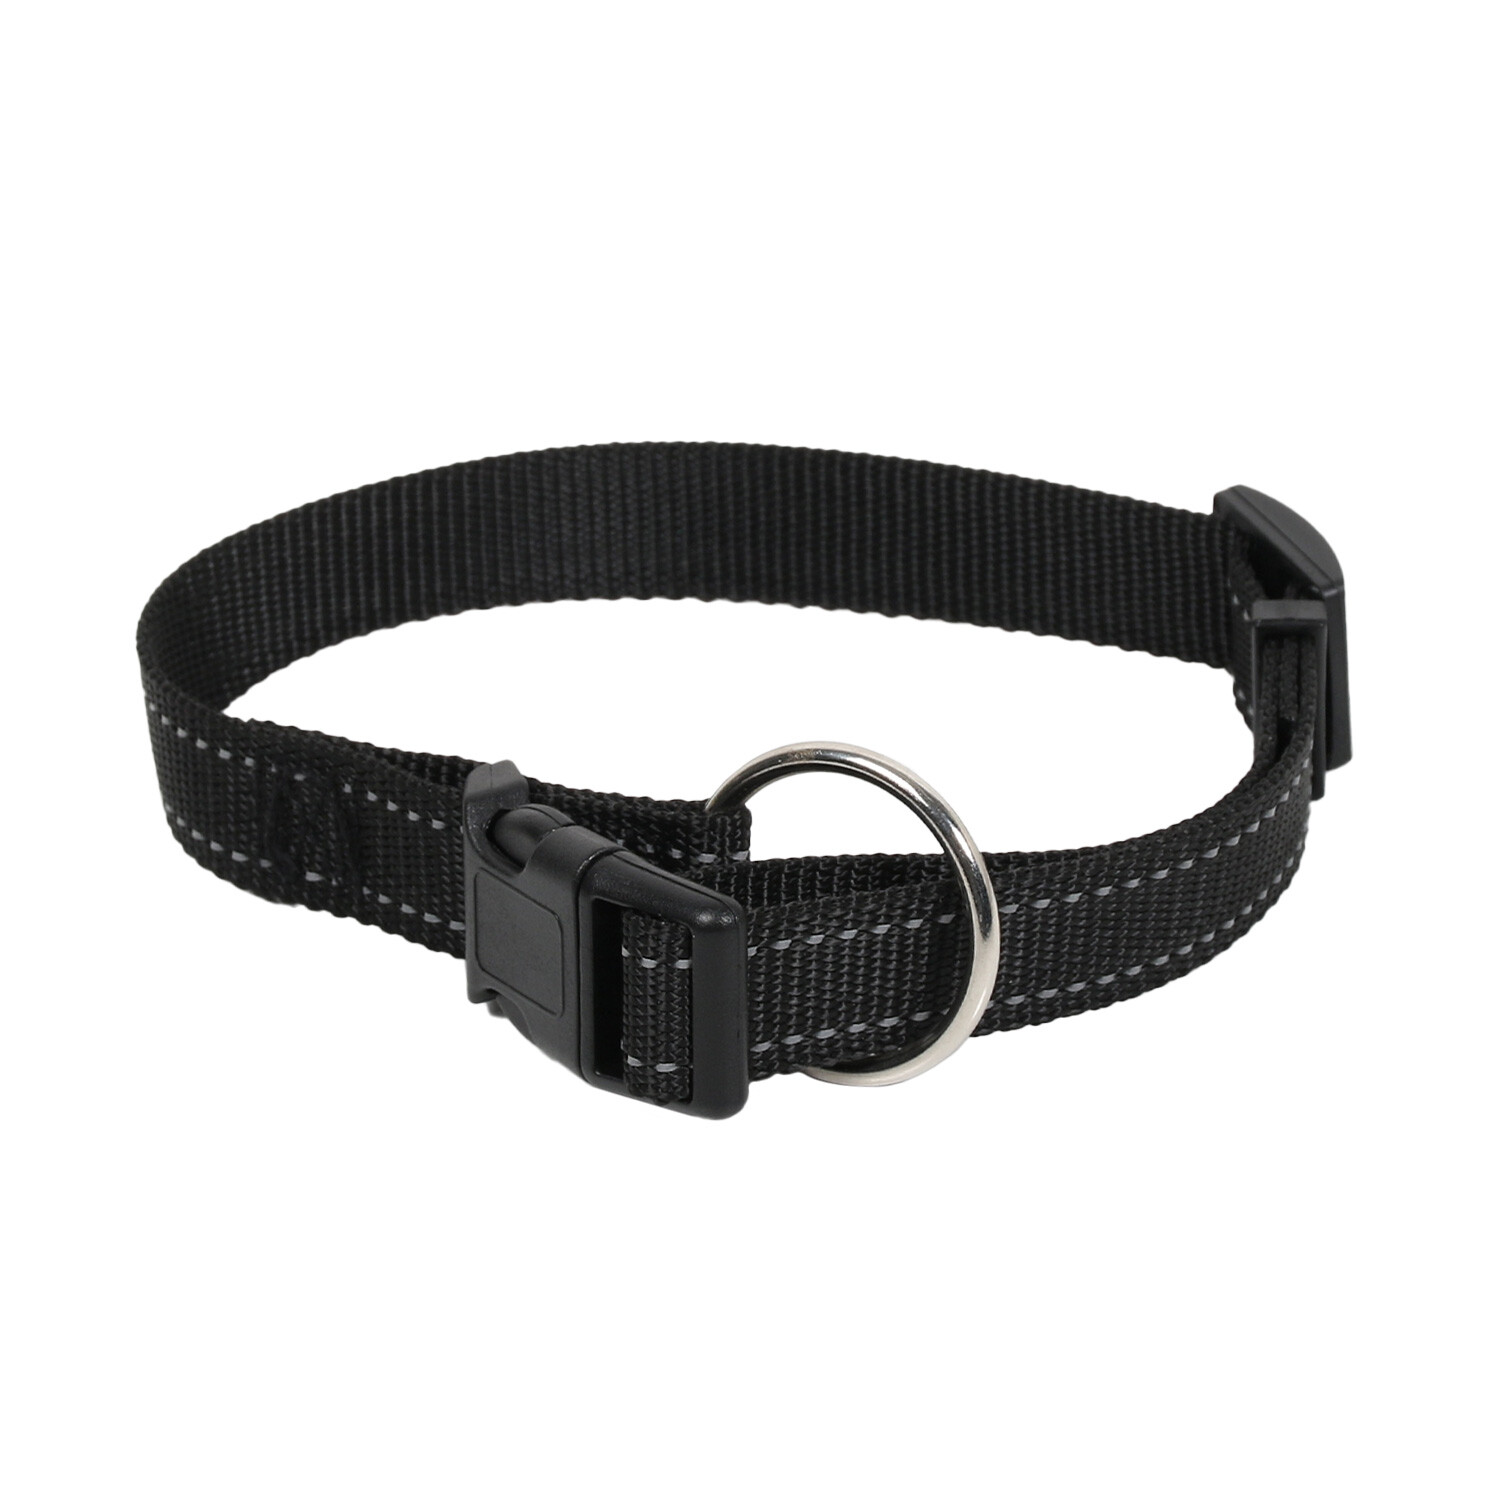 Reflective Nylon Dog Collar - Black / Small Image 4